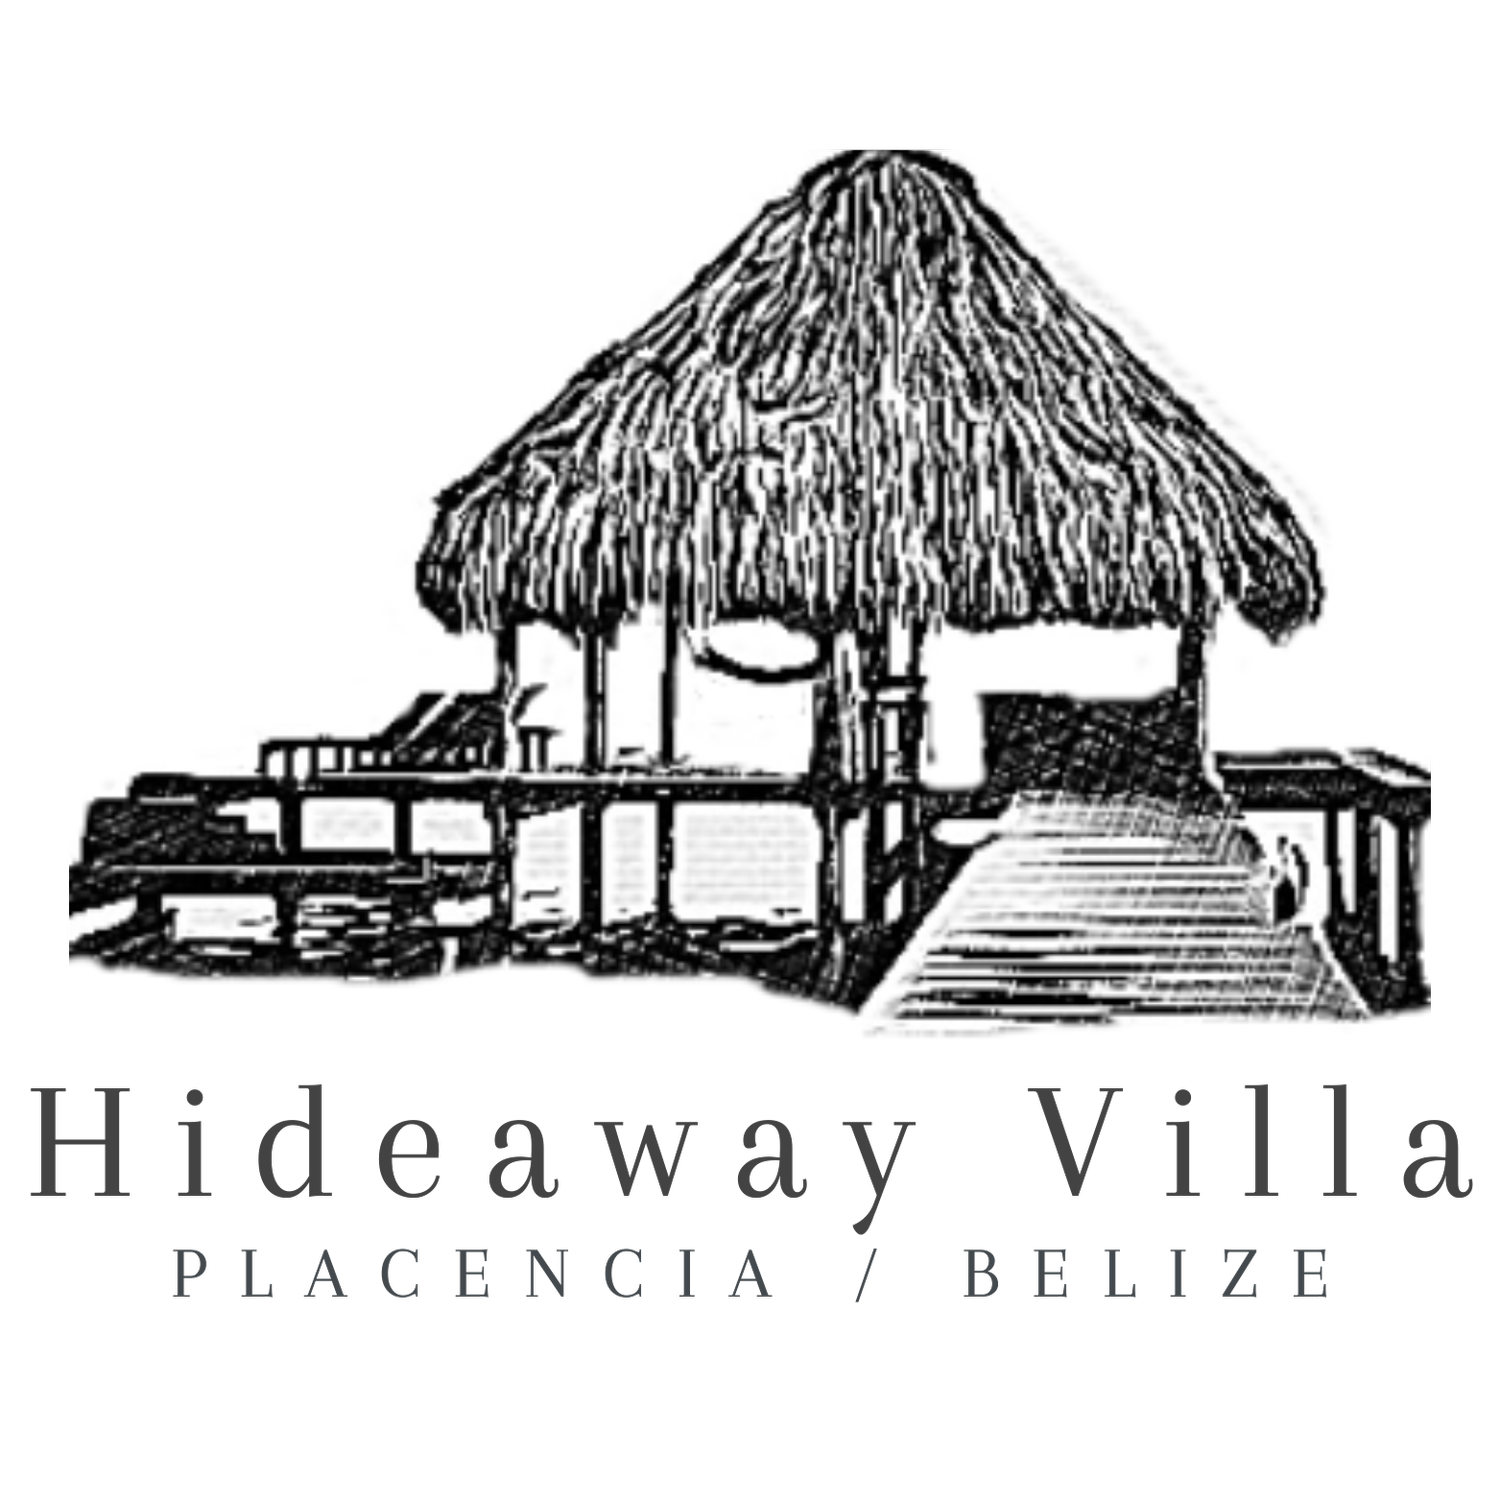 Hideaway Villa Belize